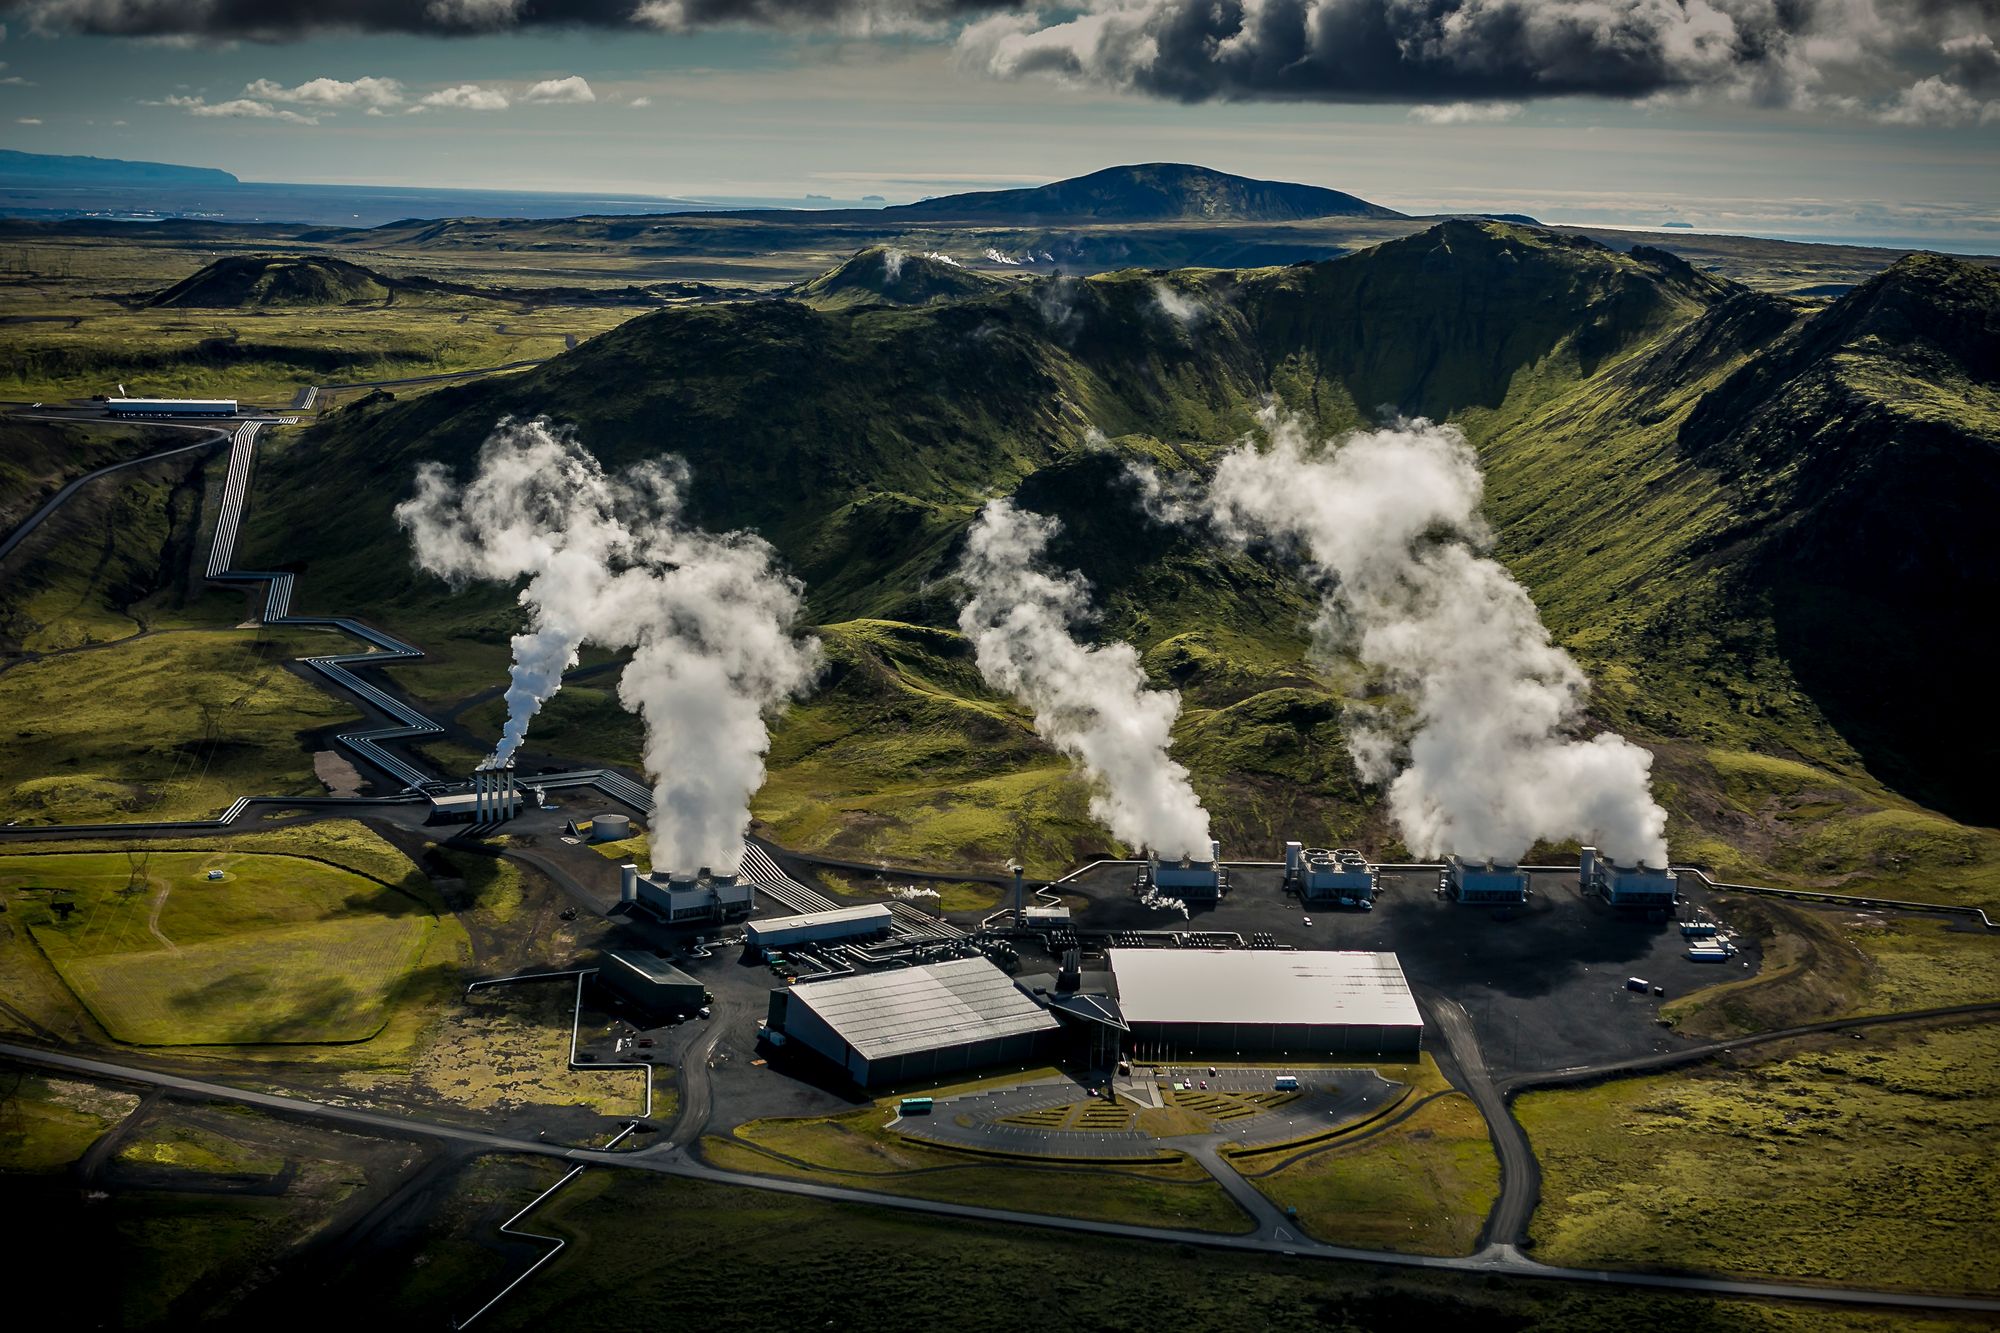 ON Hellisheiði geothermal power plant